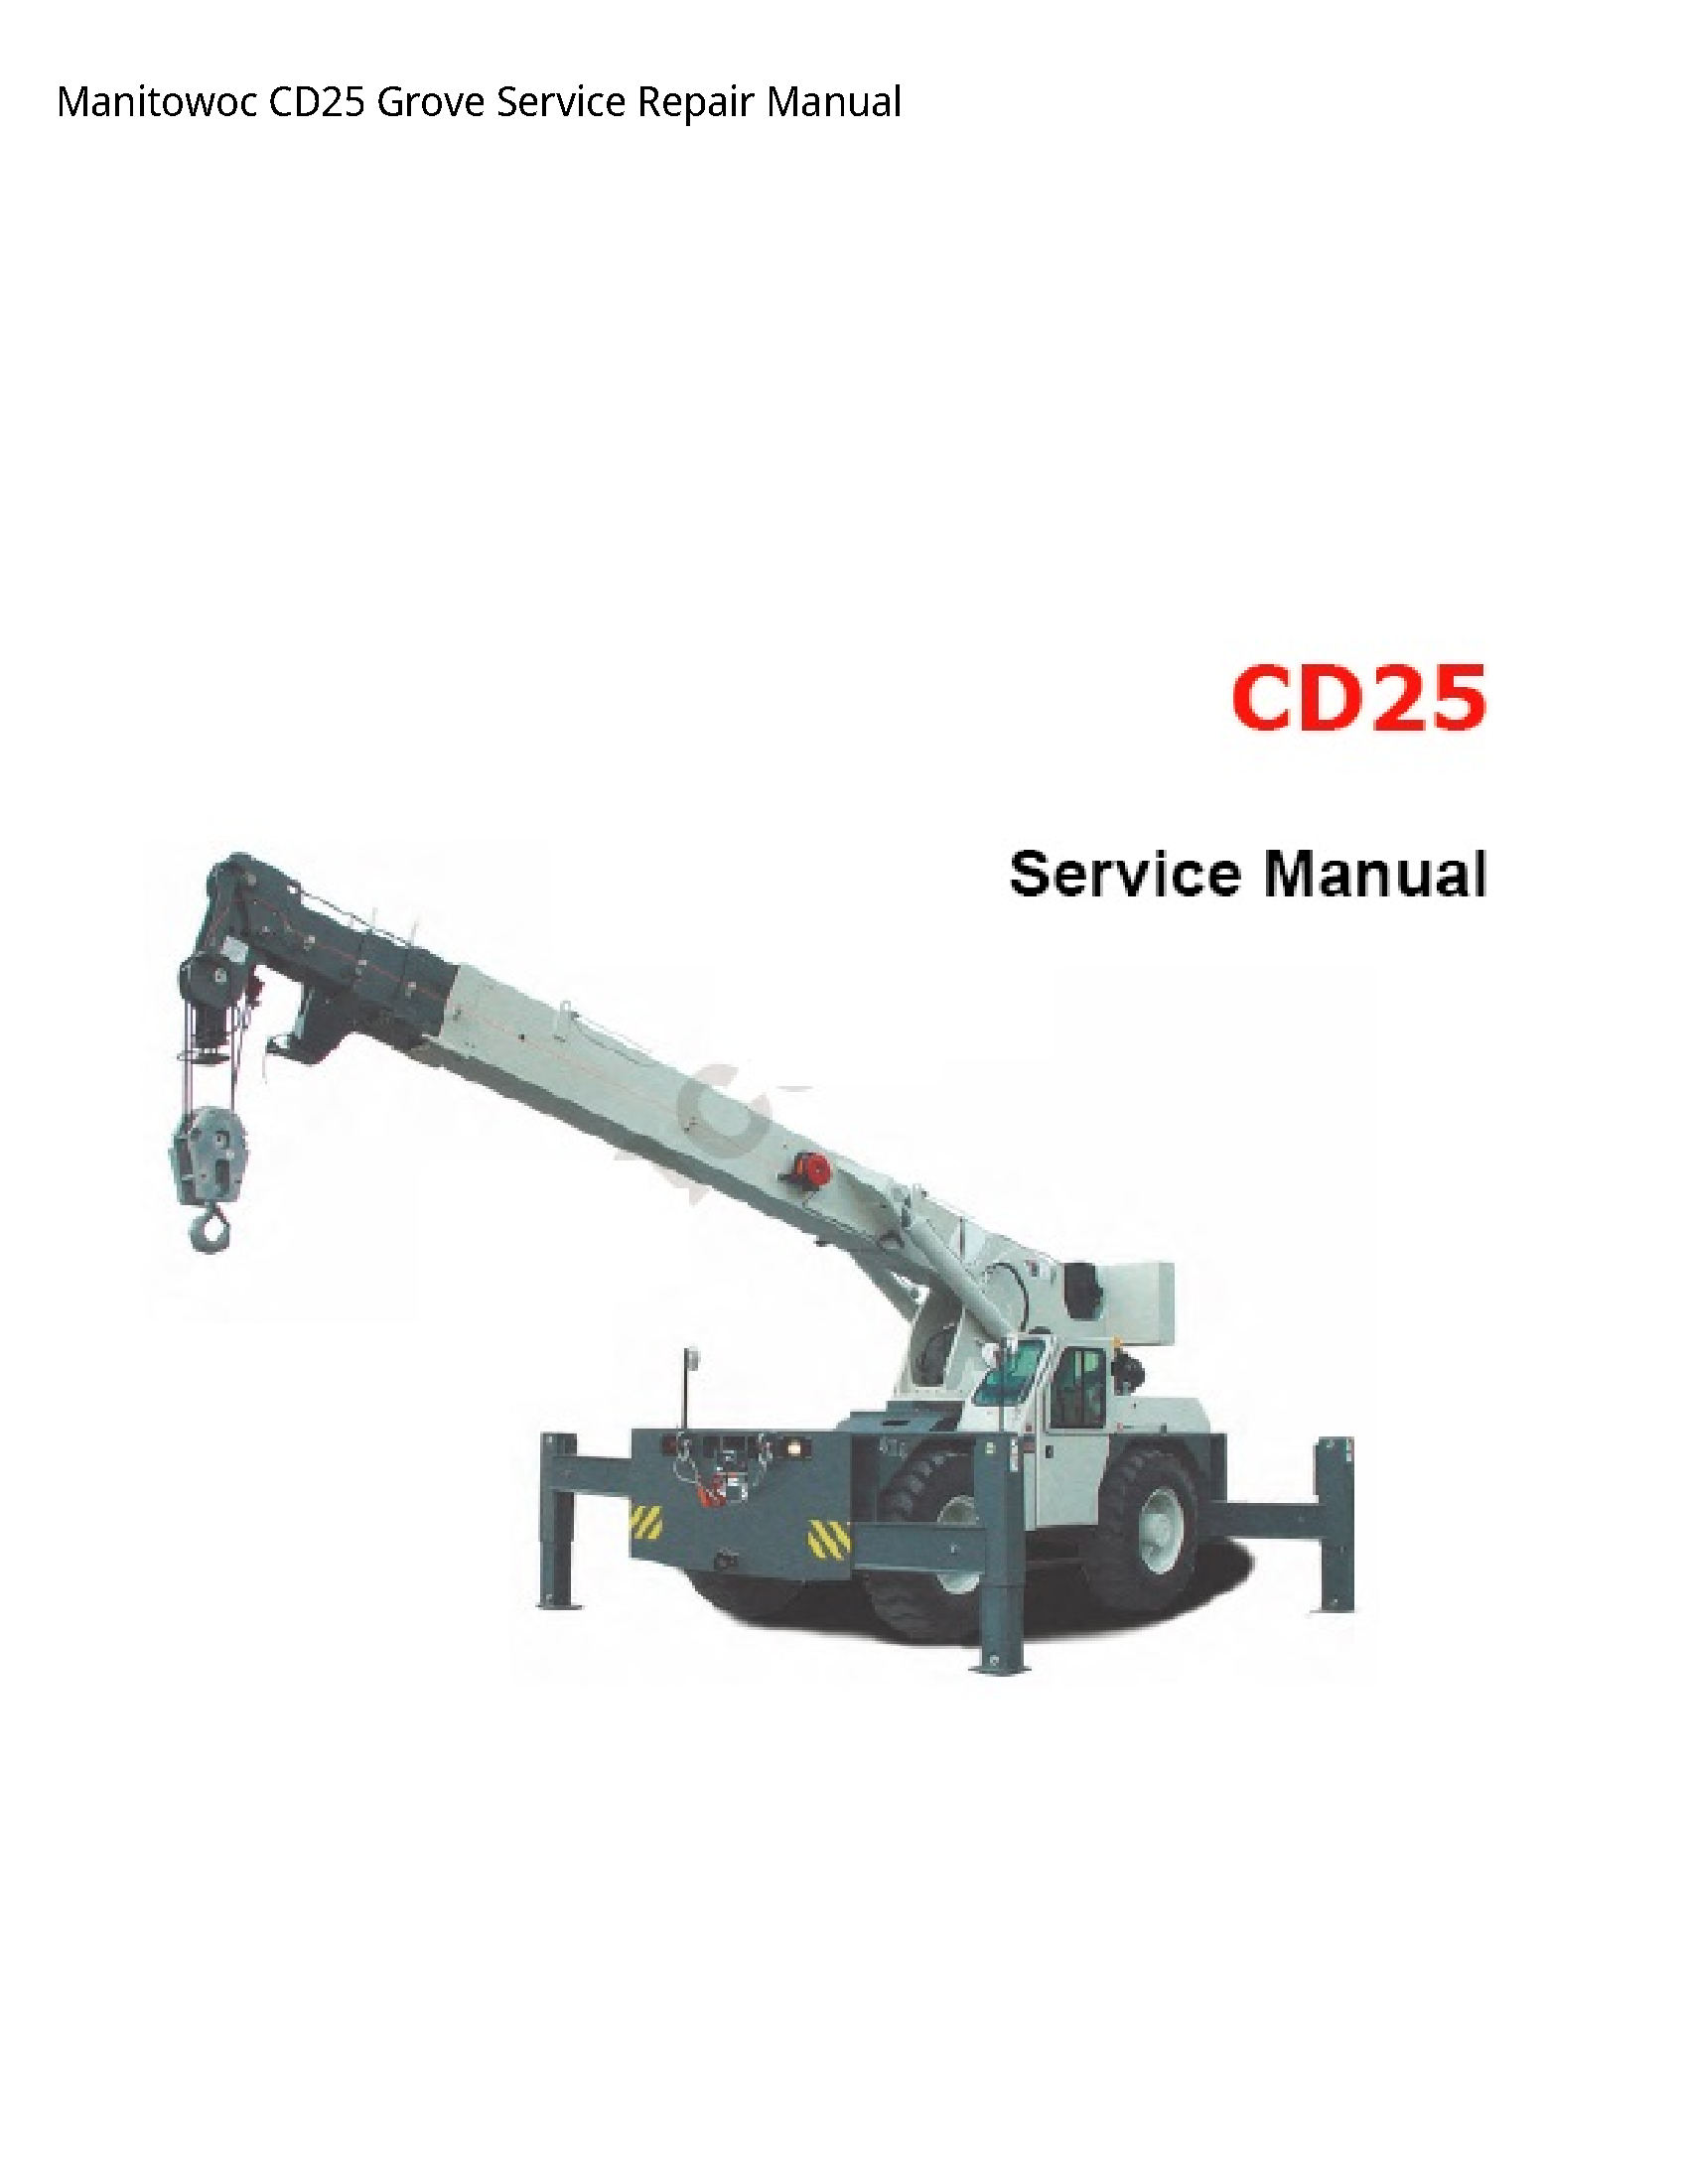 Manitowoc CD25 Grove manual